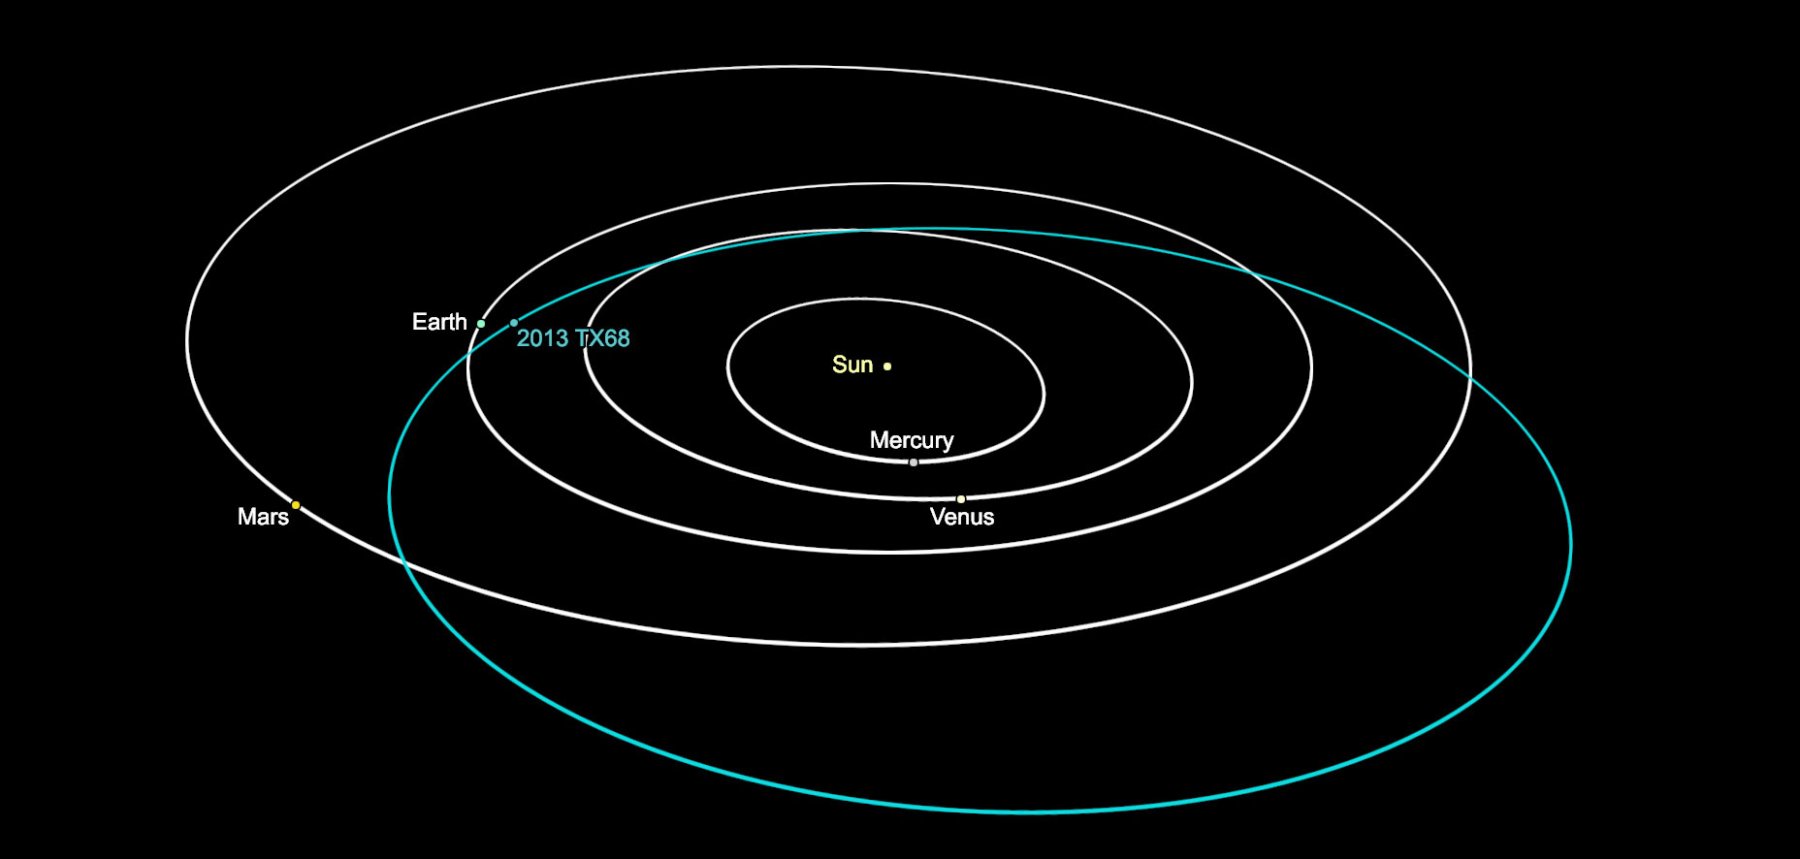 2013 TX68 asteroid